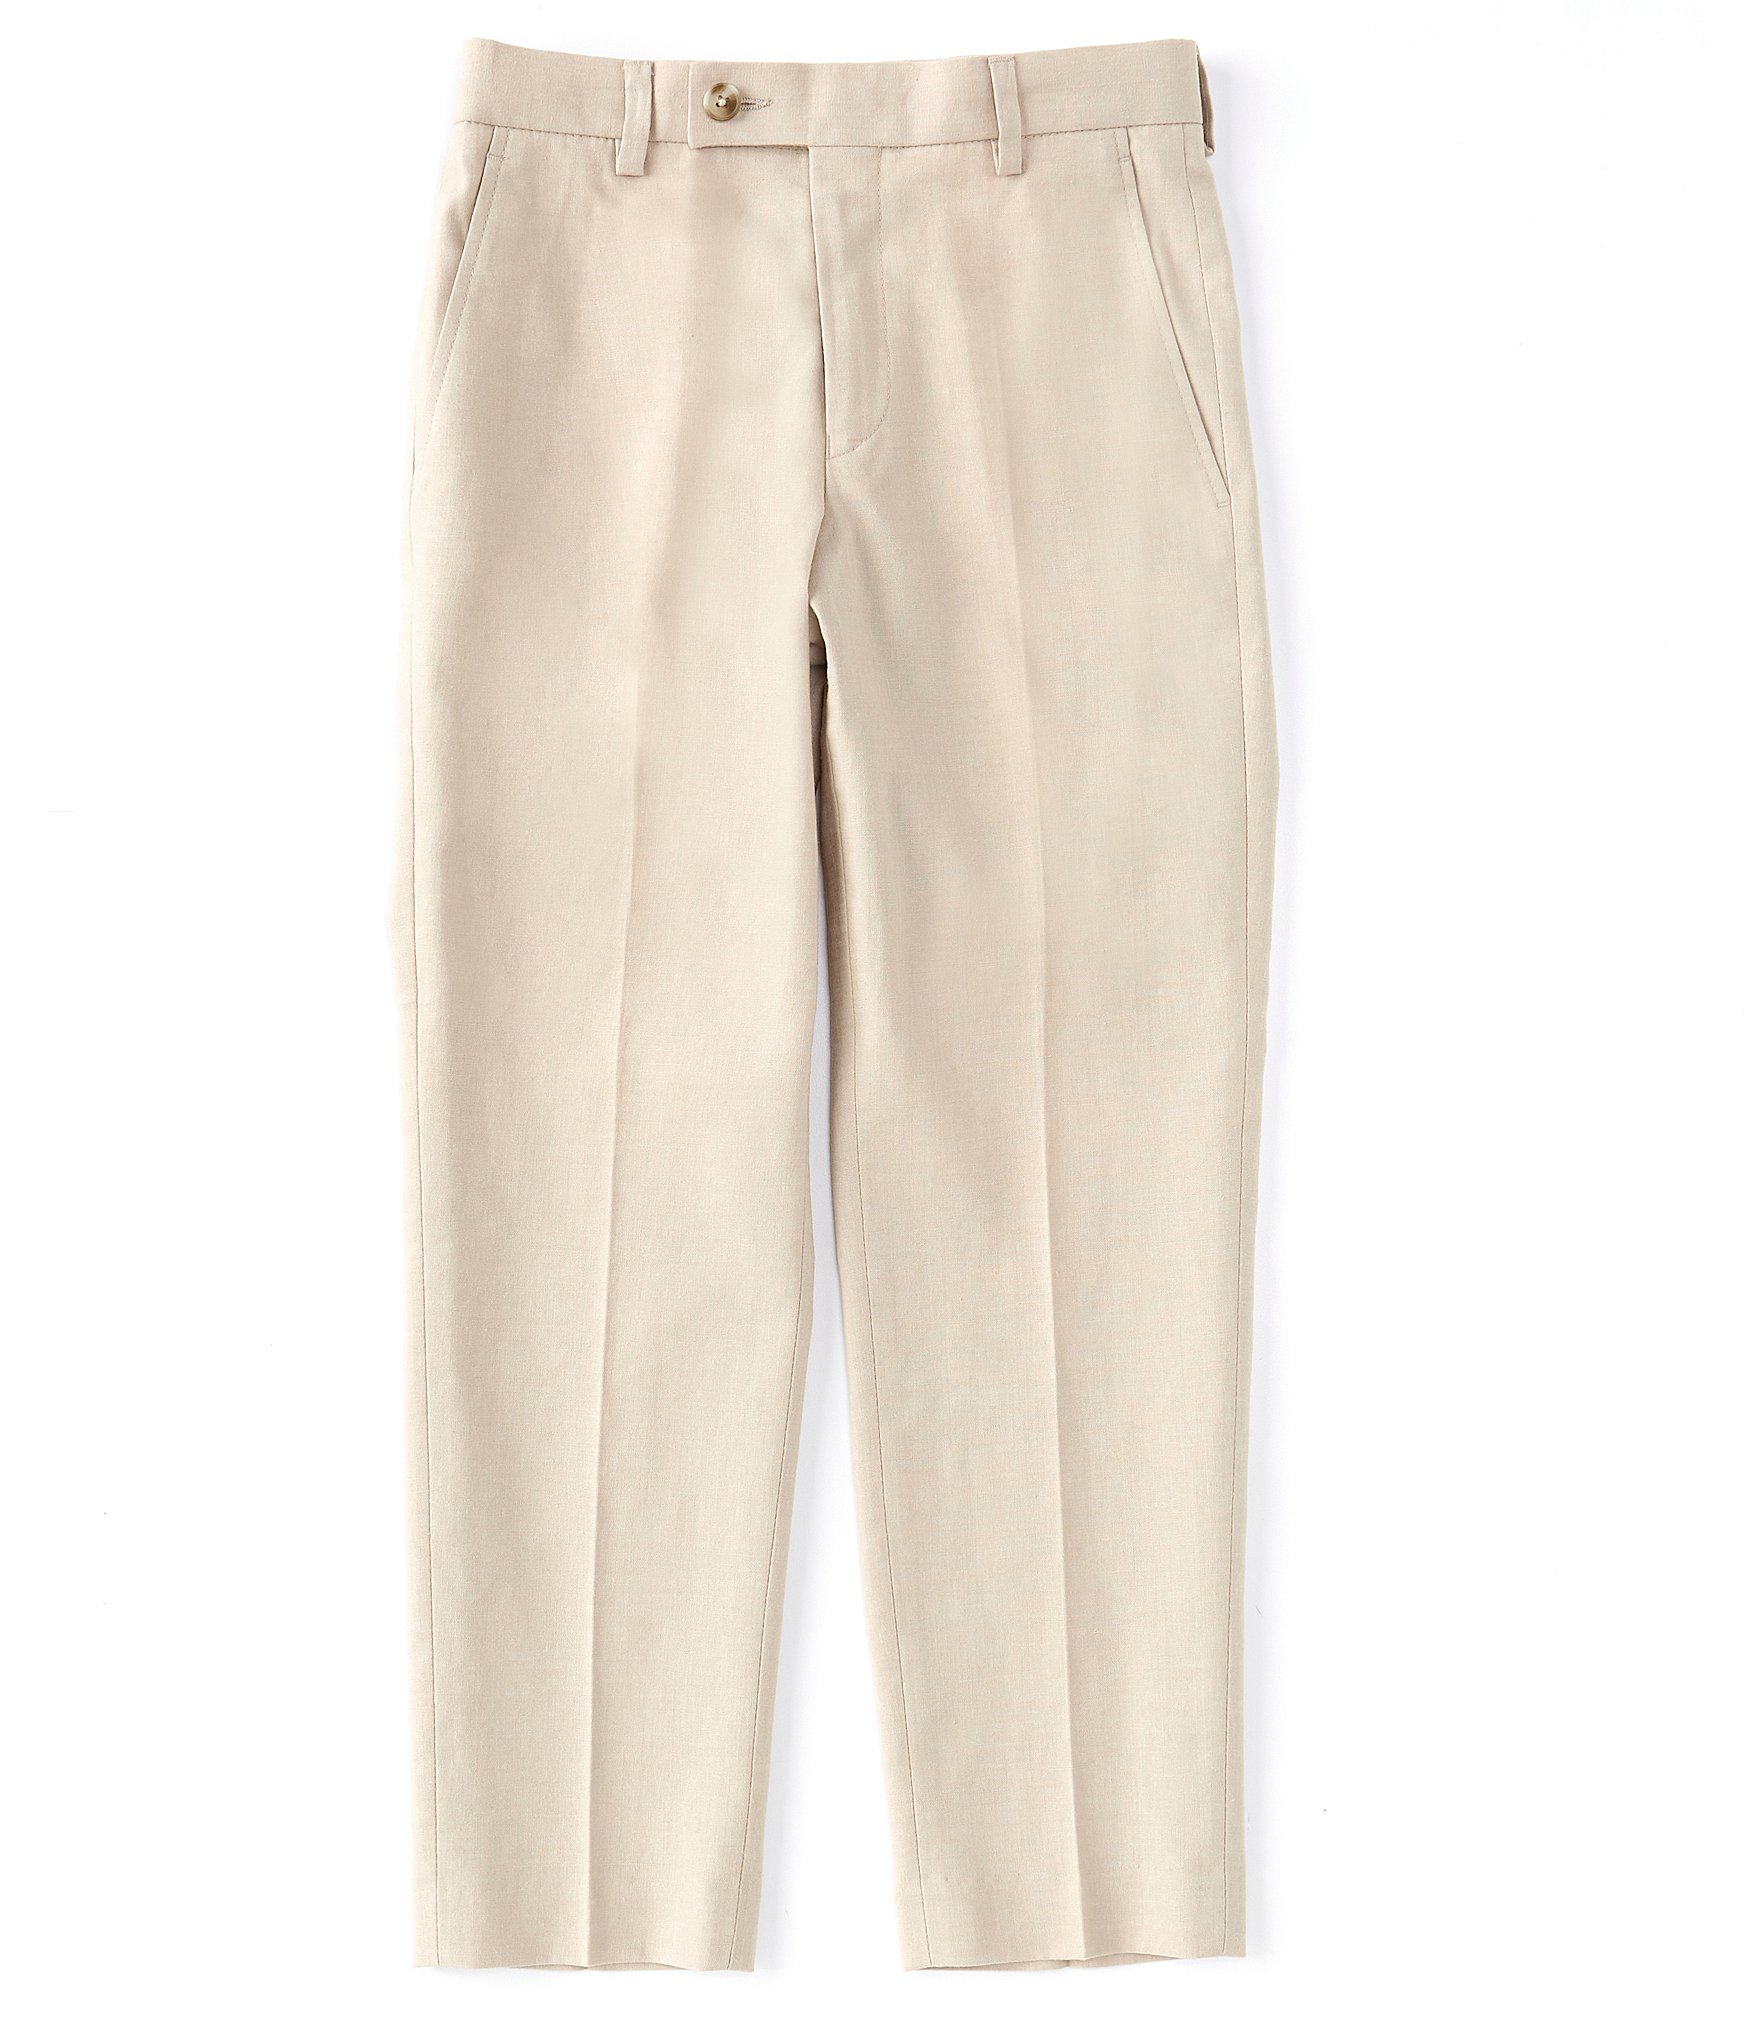 Boys Slim Fit Dress Pants Suit Slacks for Kids - Tuxedos Online